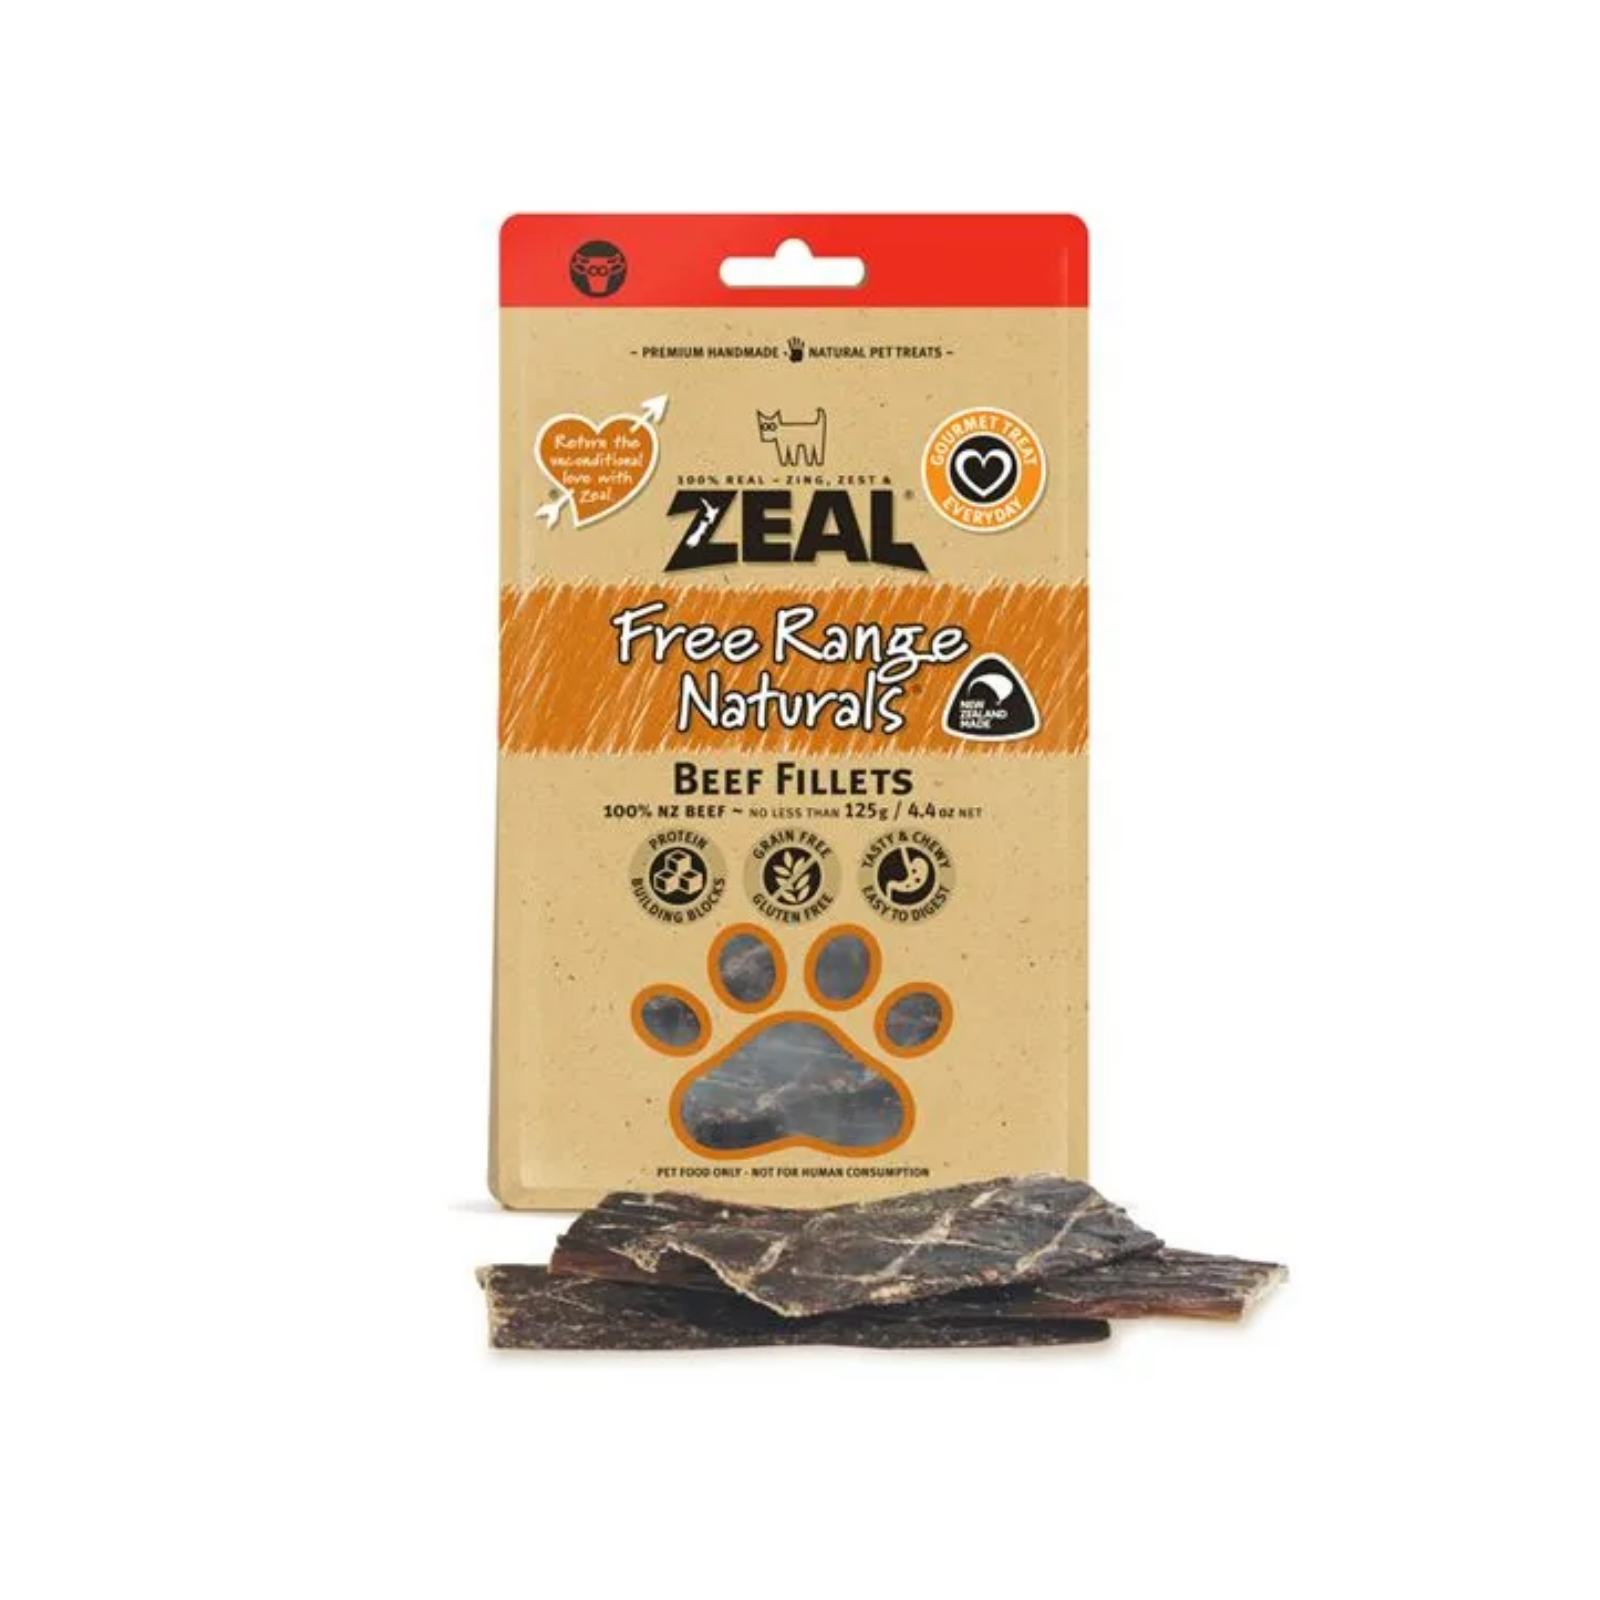 Zeal Free Range Naturals Beef Fillets Dog Treats.